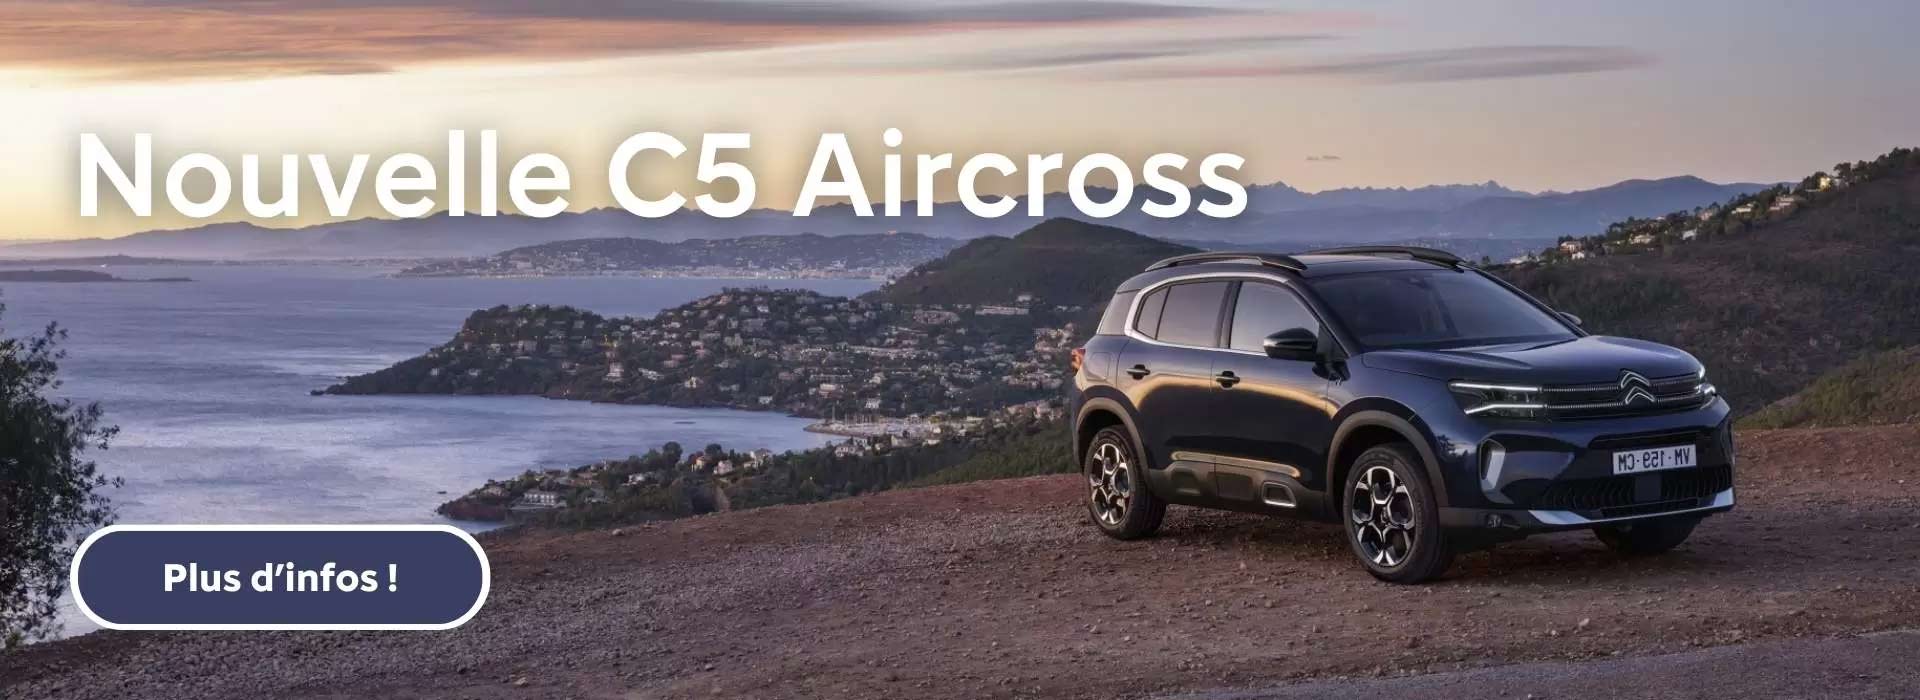 Nouvelle C5 Aircross